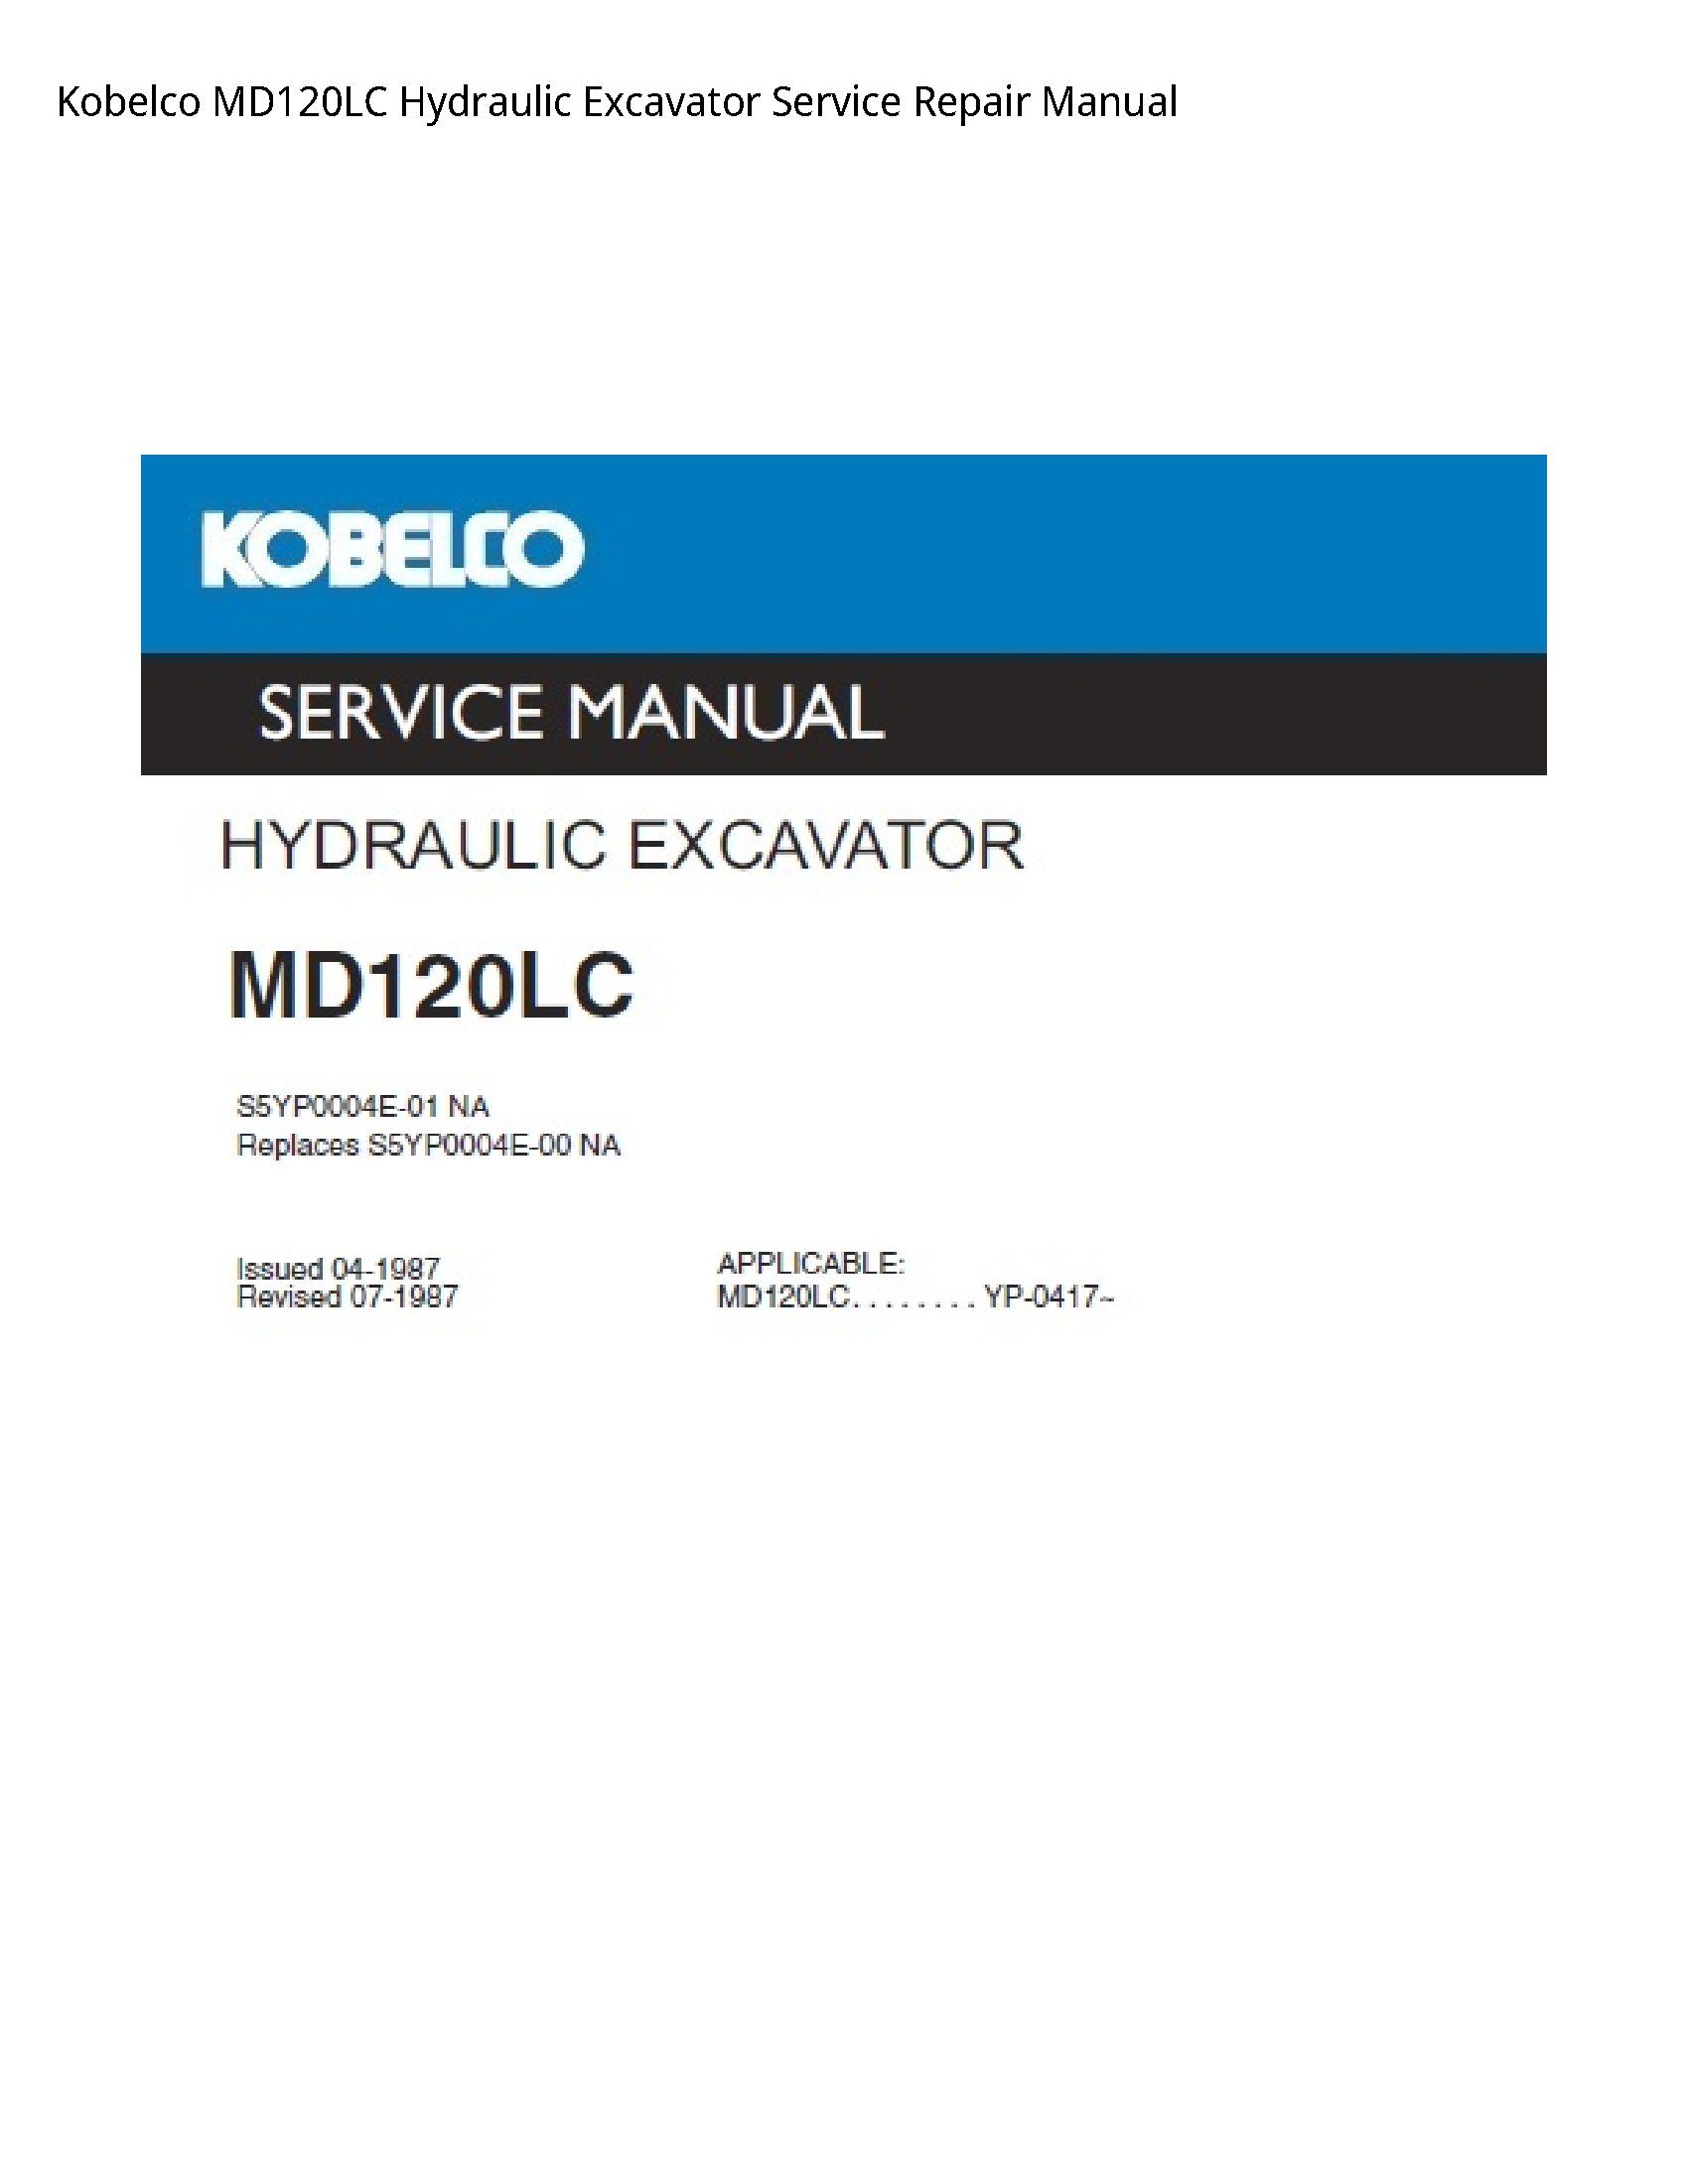 Kobelco MD120LC Hydraulic Excavator manual